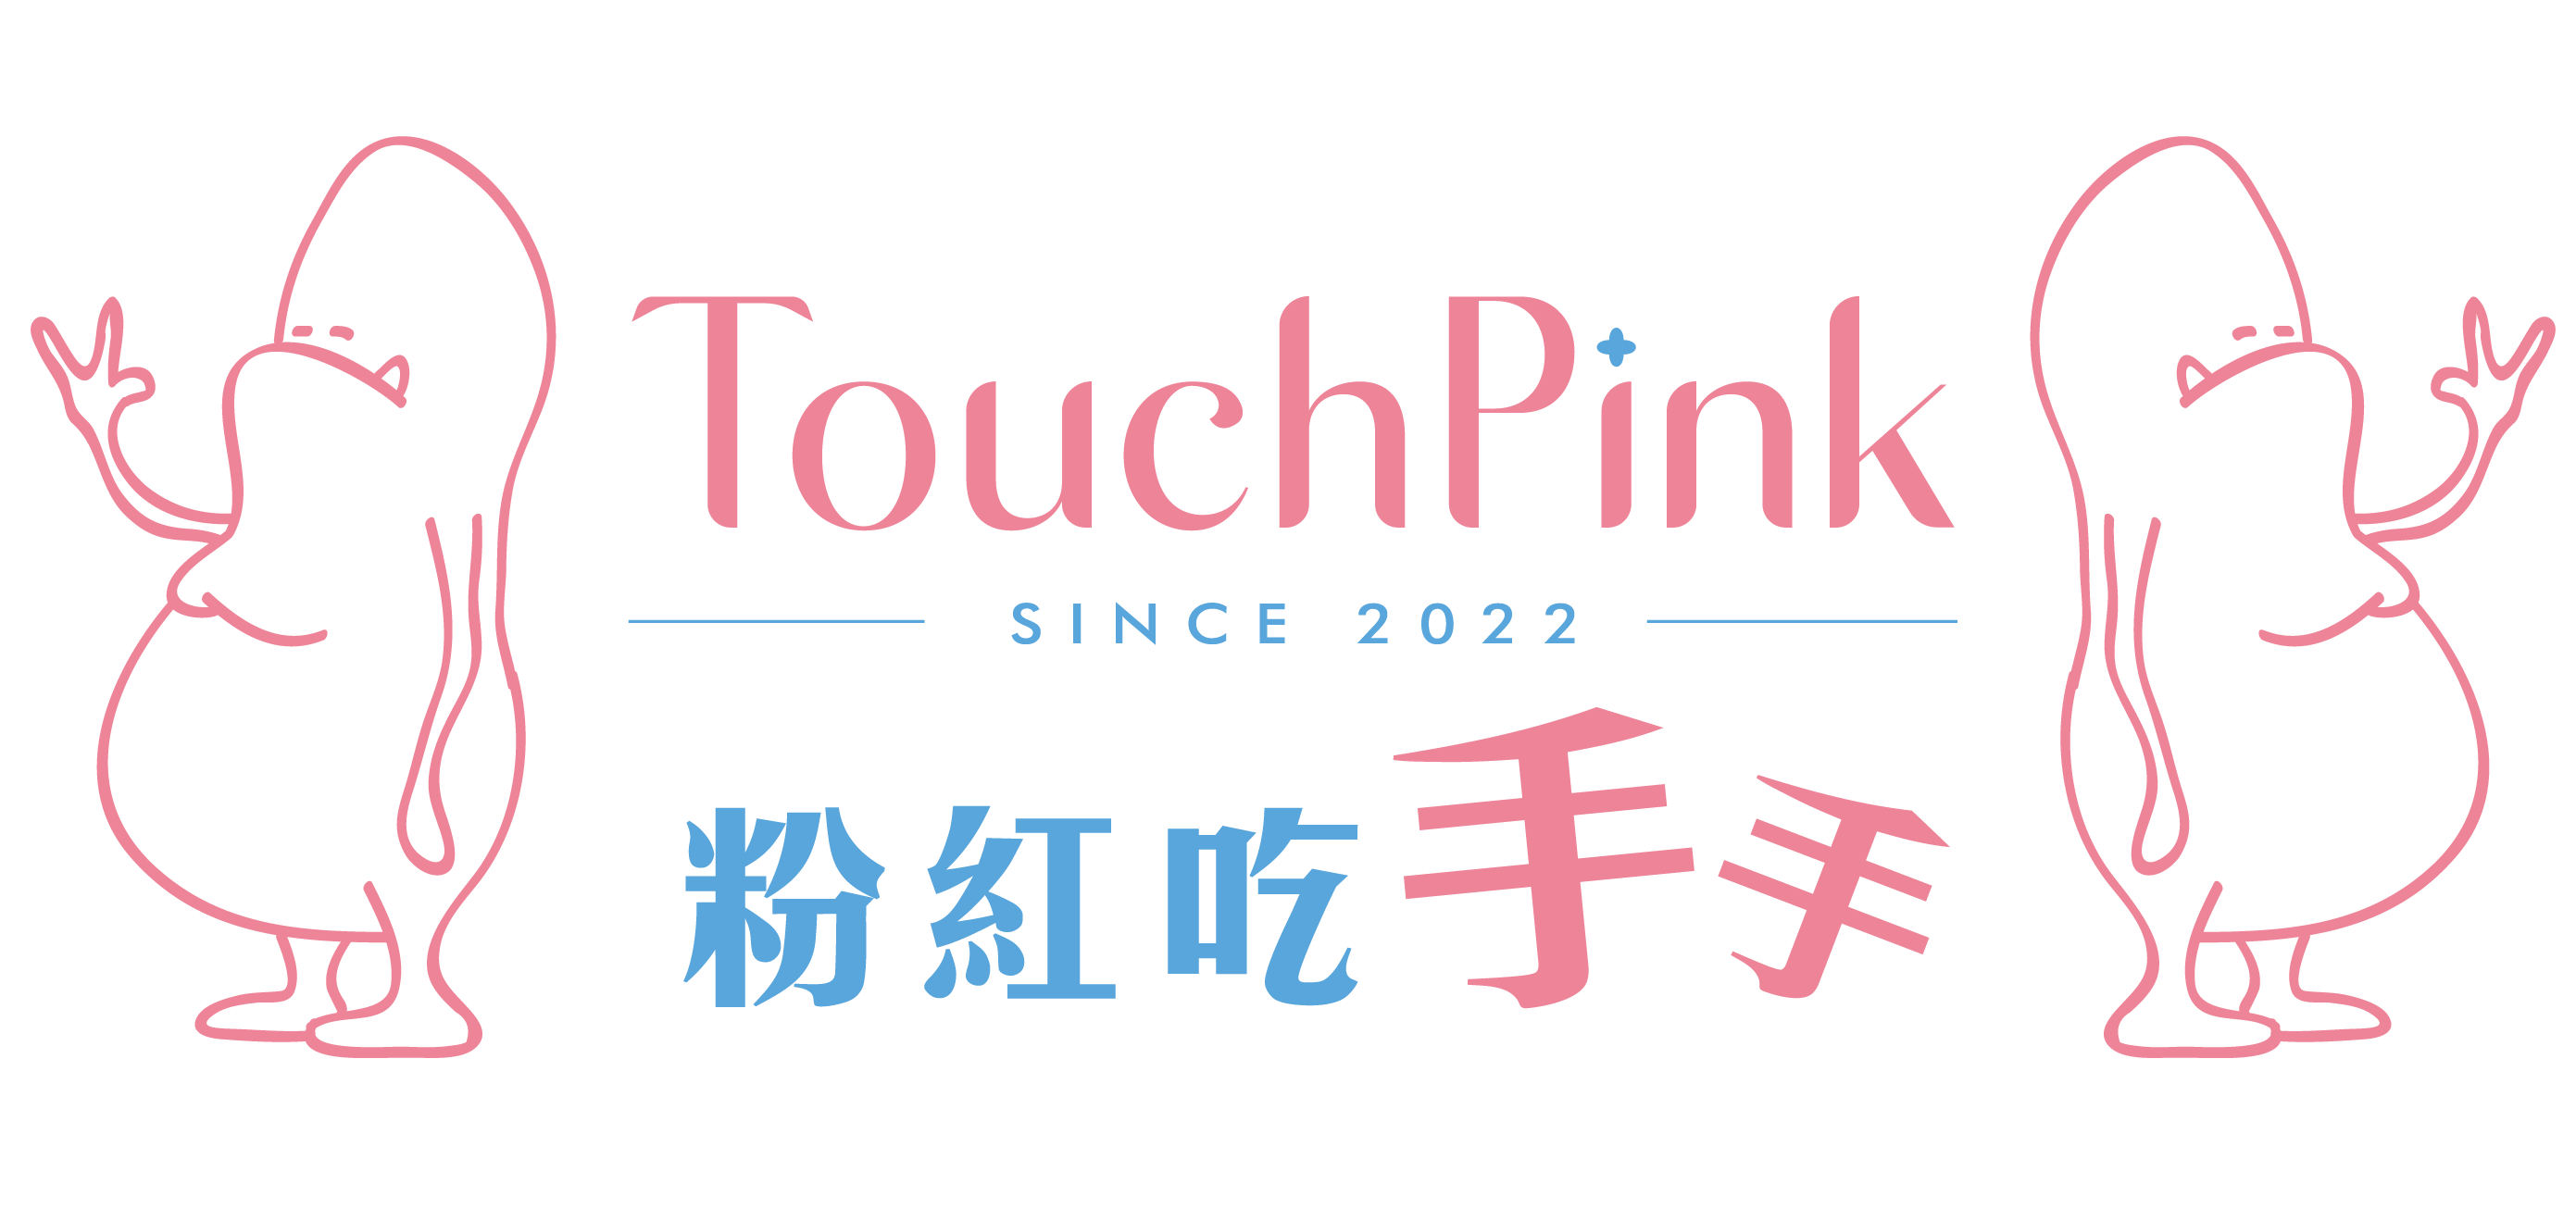 TouchPink 粉紅吃手手